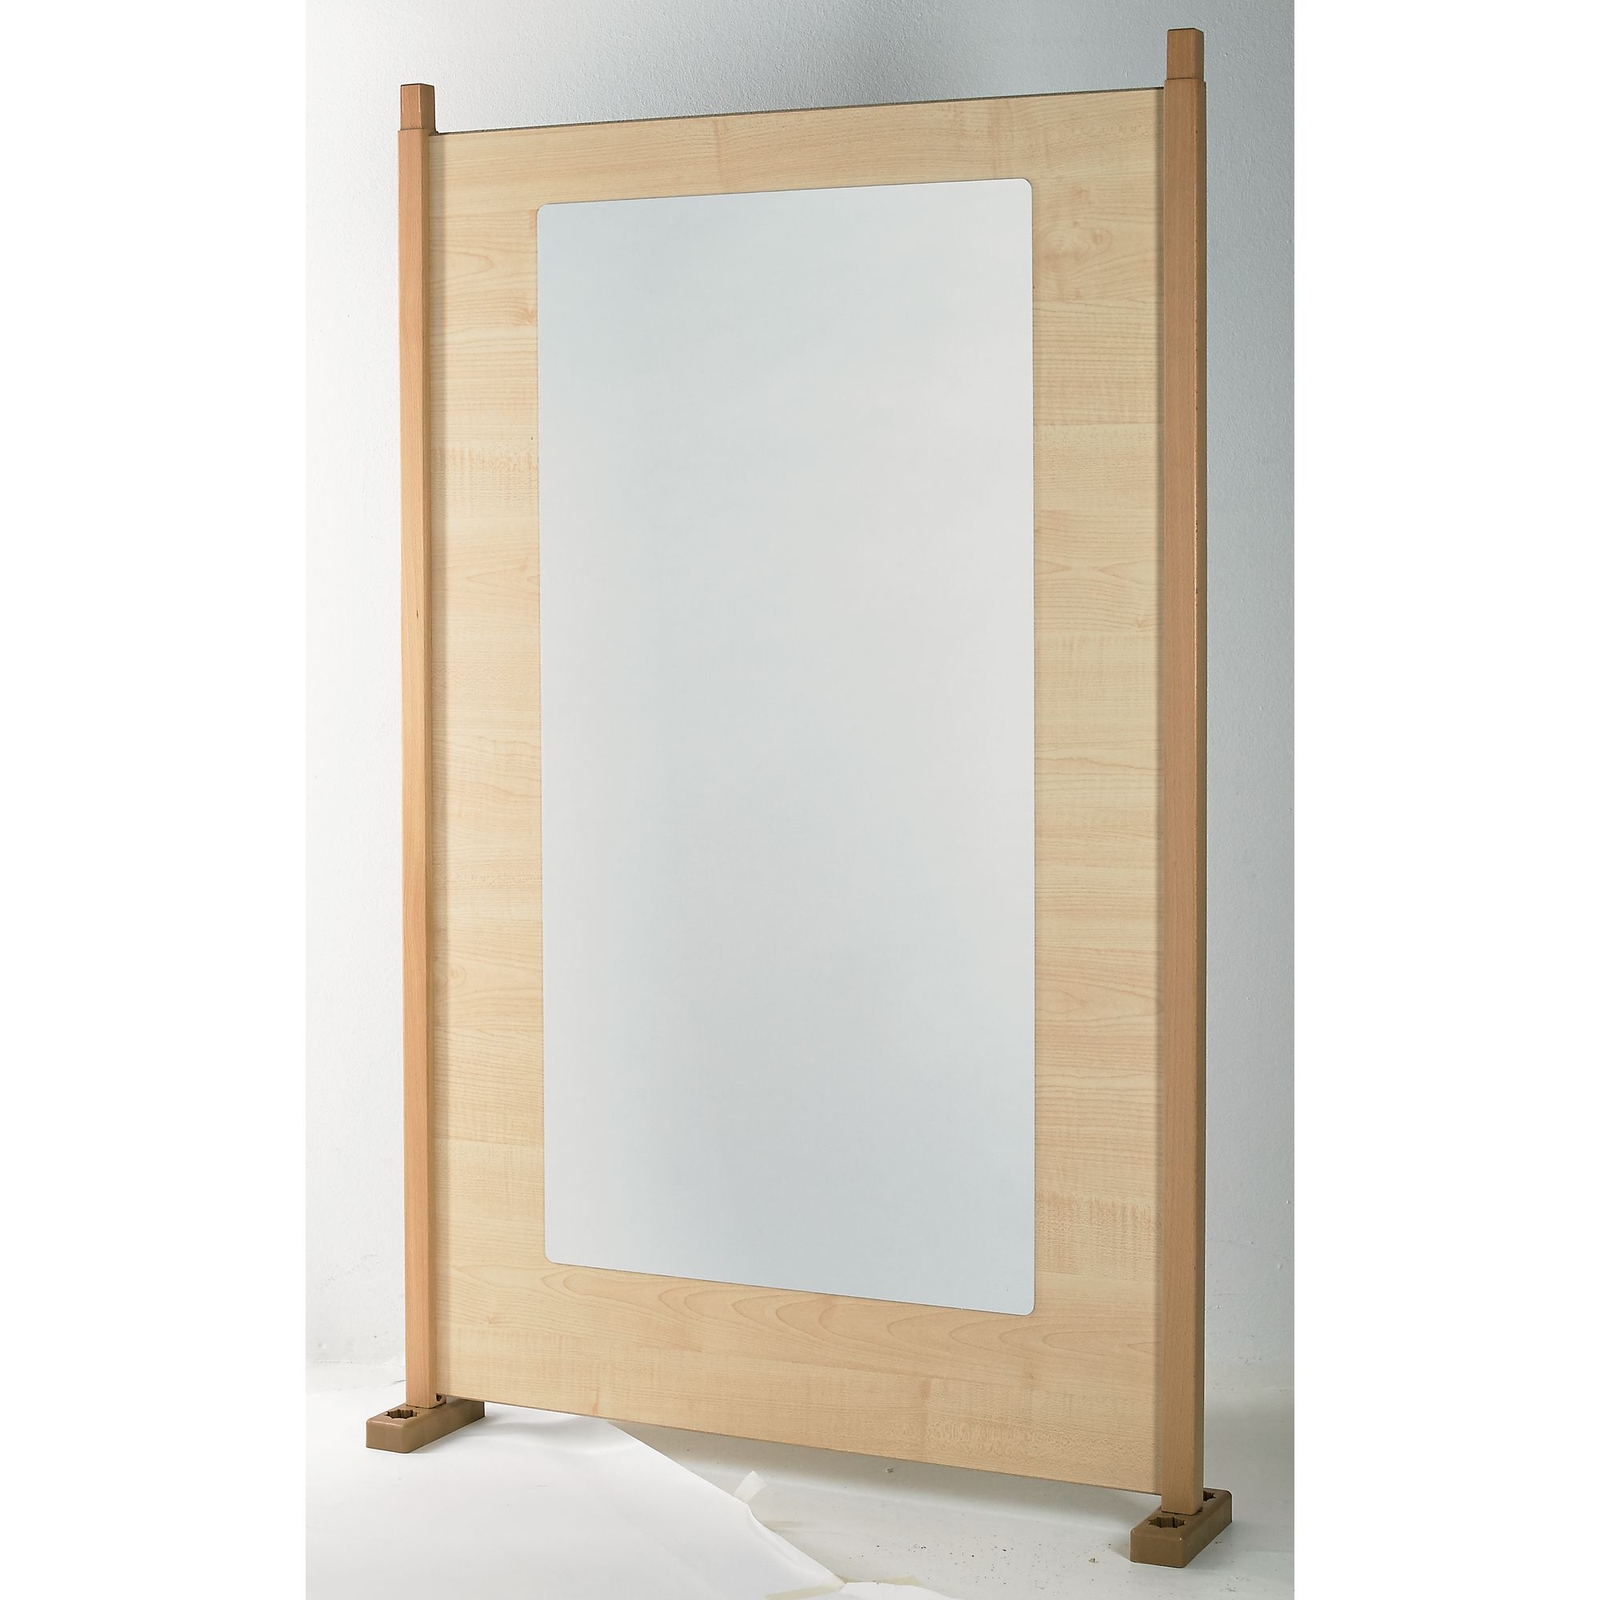 Millhouse Wooden Maple Effect Mirror Play Panels - 1290 x 790mm - Each